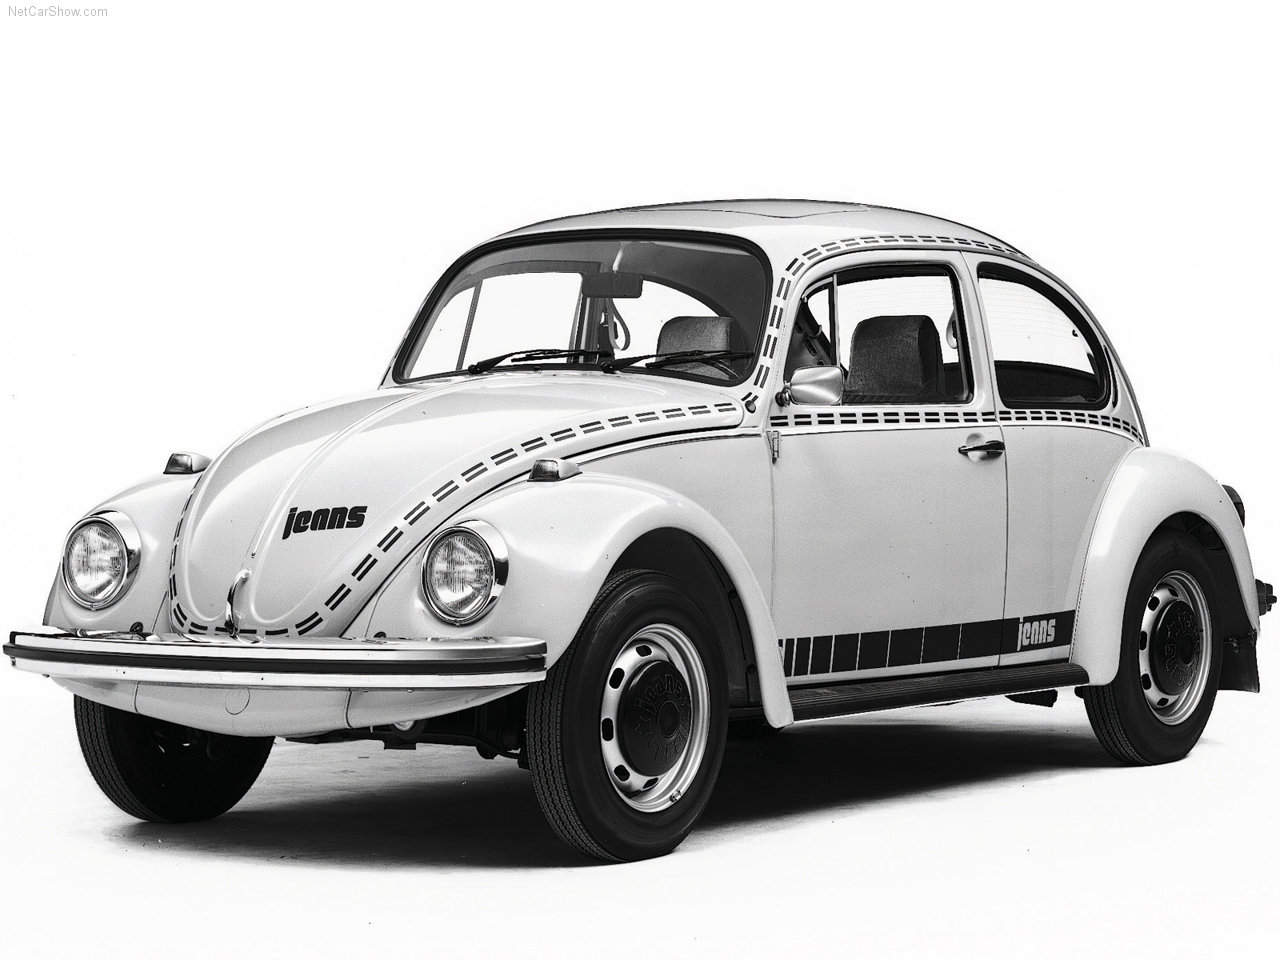 https://blogger.googleusercontent.com/img/b/R29vZ2xl/AVvXsEinKDcs2cu7VT3a9bvxIsv2q7fBc08kxp3Z7gDFTUyReT9kRAFPosUT70xieBNmx1Pswwb4Q57PmpmzT9EAFN70DYGLJIeO05P9HBmcBaBucti55YUfcdUrqXUY7JqC8NKb2arvcO2rws0/s1600/Volkswagen-Beetle_1938_wallpaper.jpg